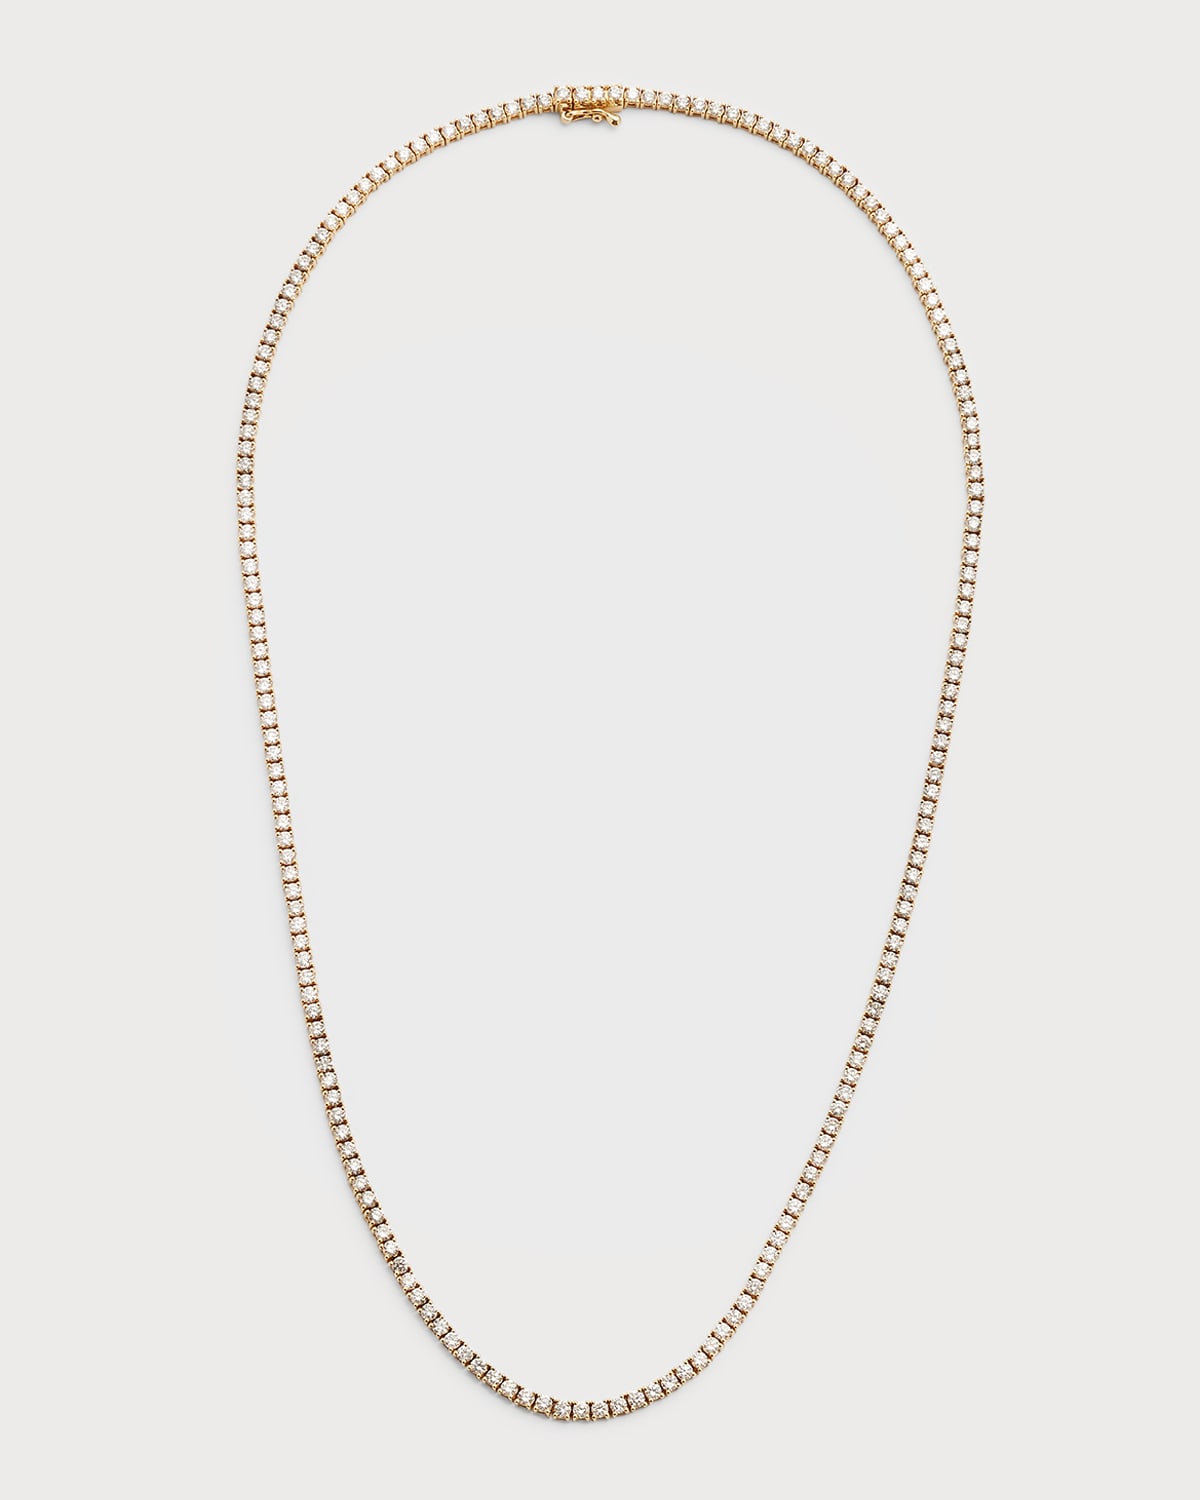 Hepburn 18k Rose Gold Diamond Choker Necklace, 16"L